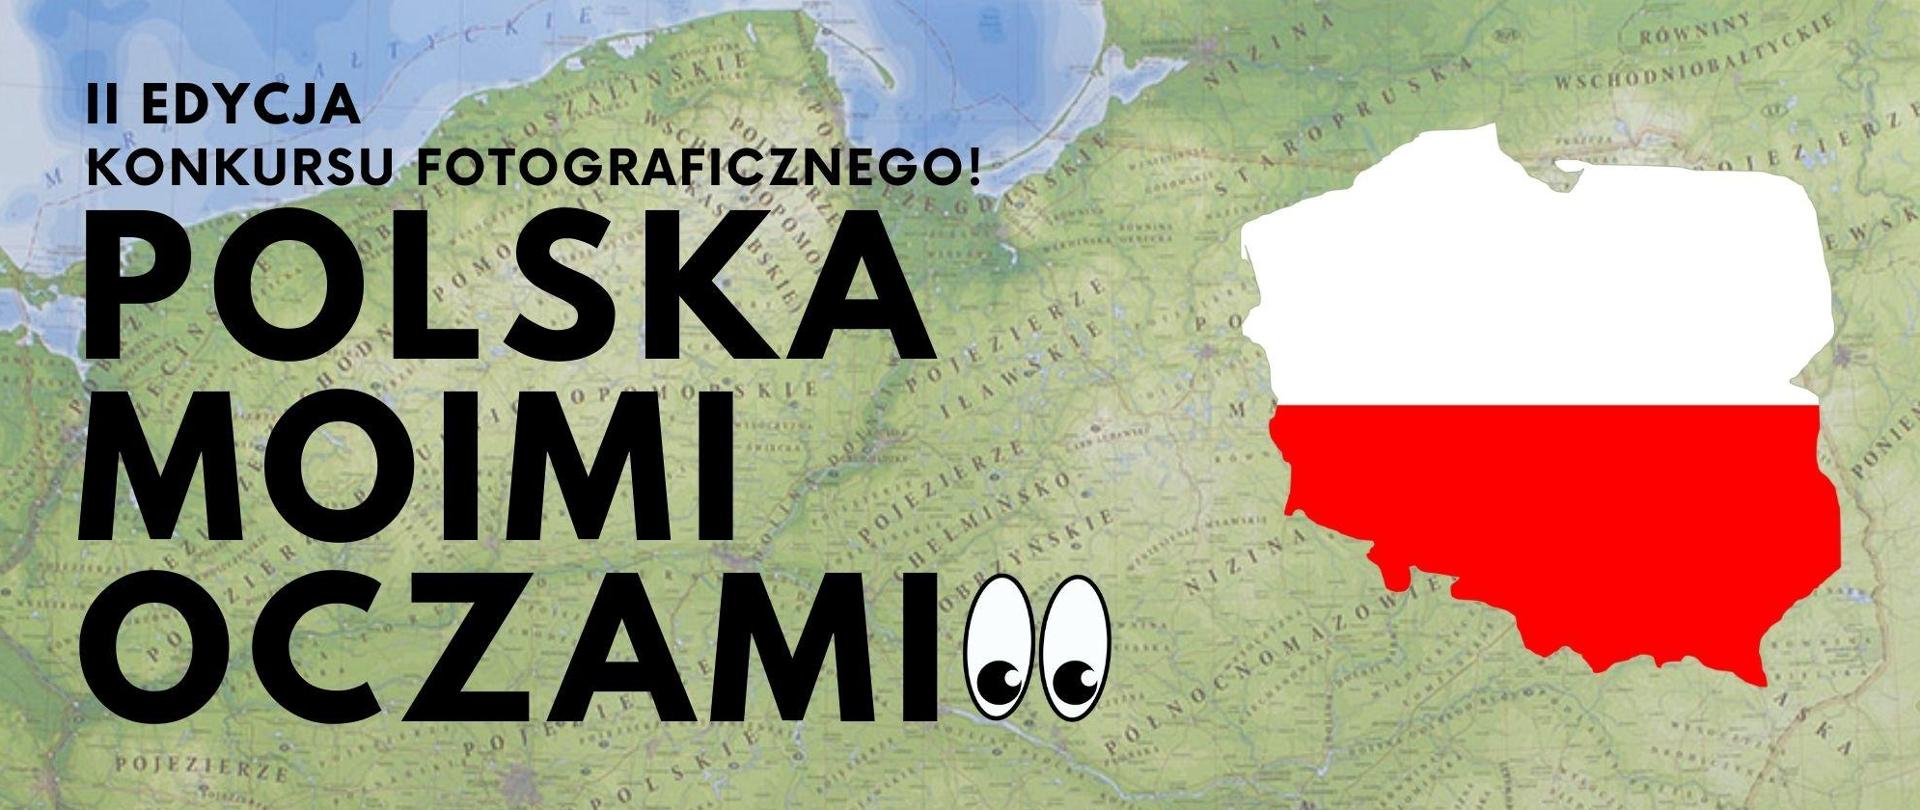 Polska moimi oczami II ed.